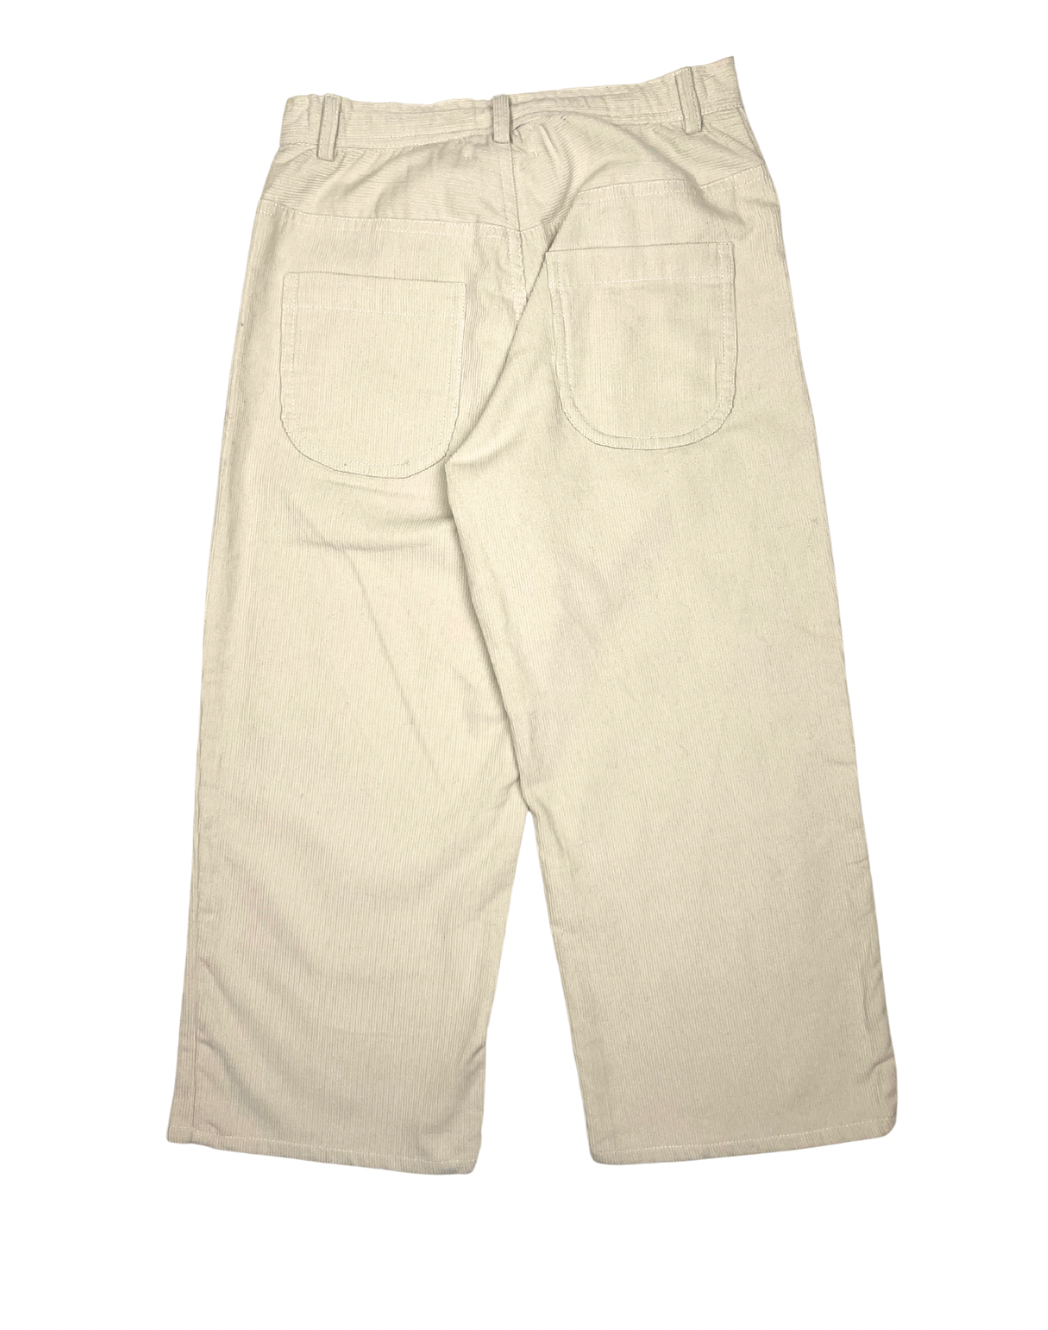 POLDER - Pantalon en velour écru - 10 ans